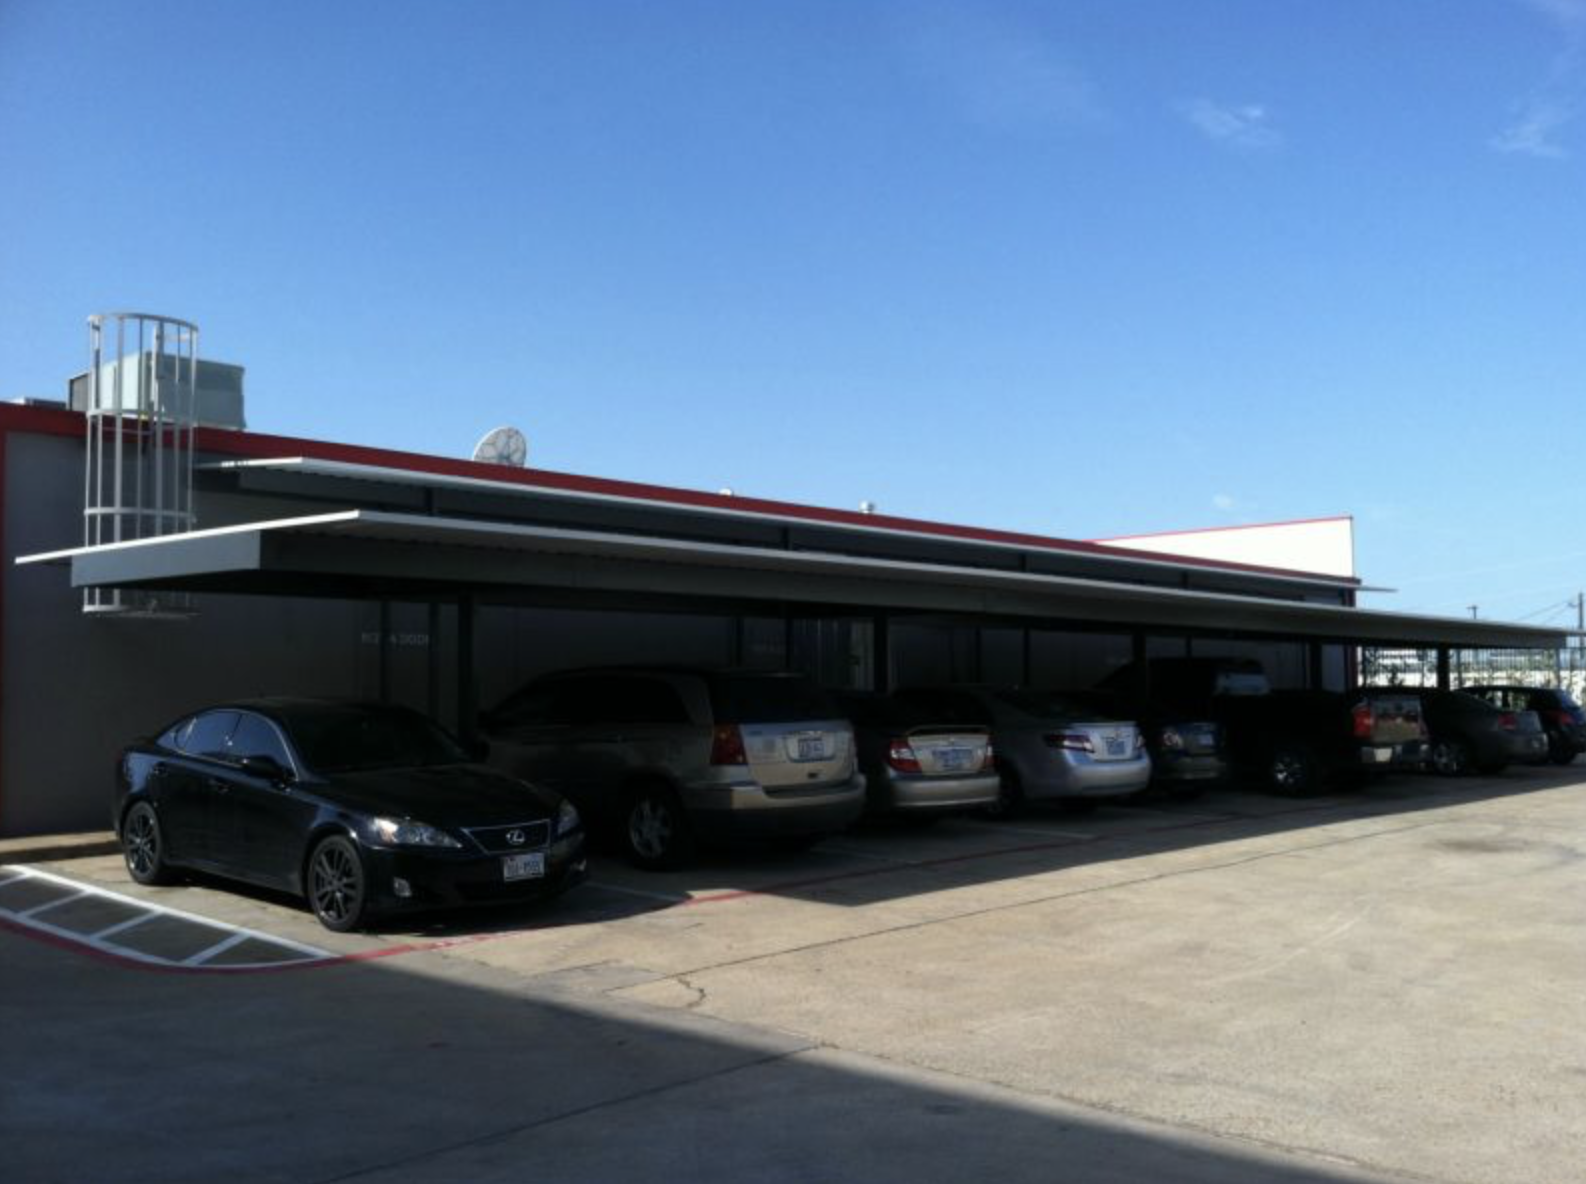 Large Commercial Carport Company Blog